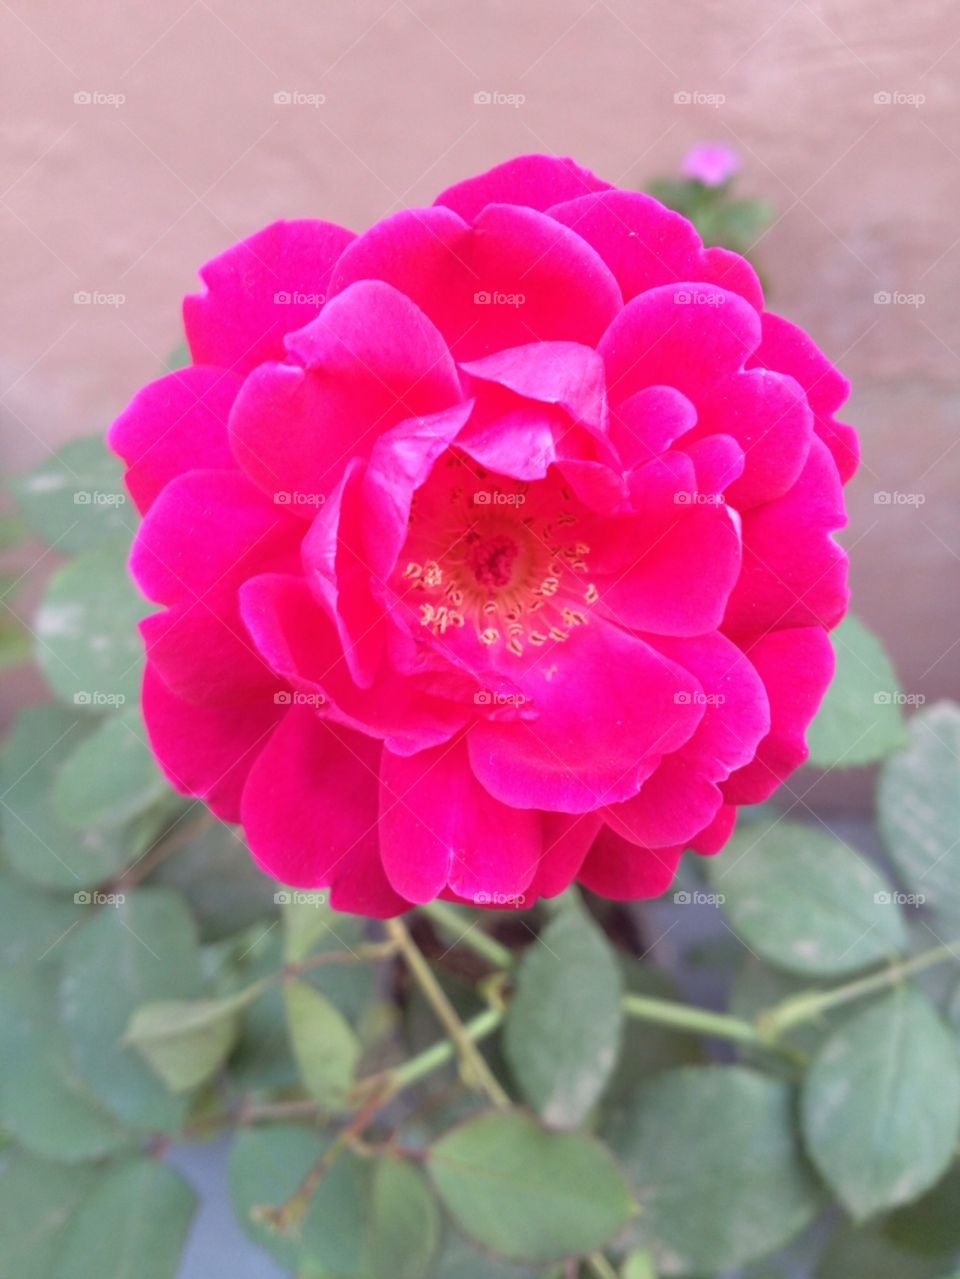 india rose valentine gift love symbol by kunaldaca